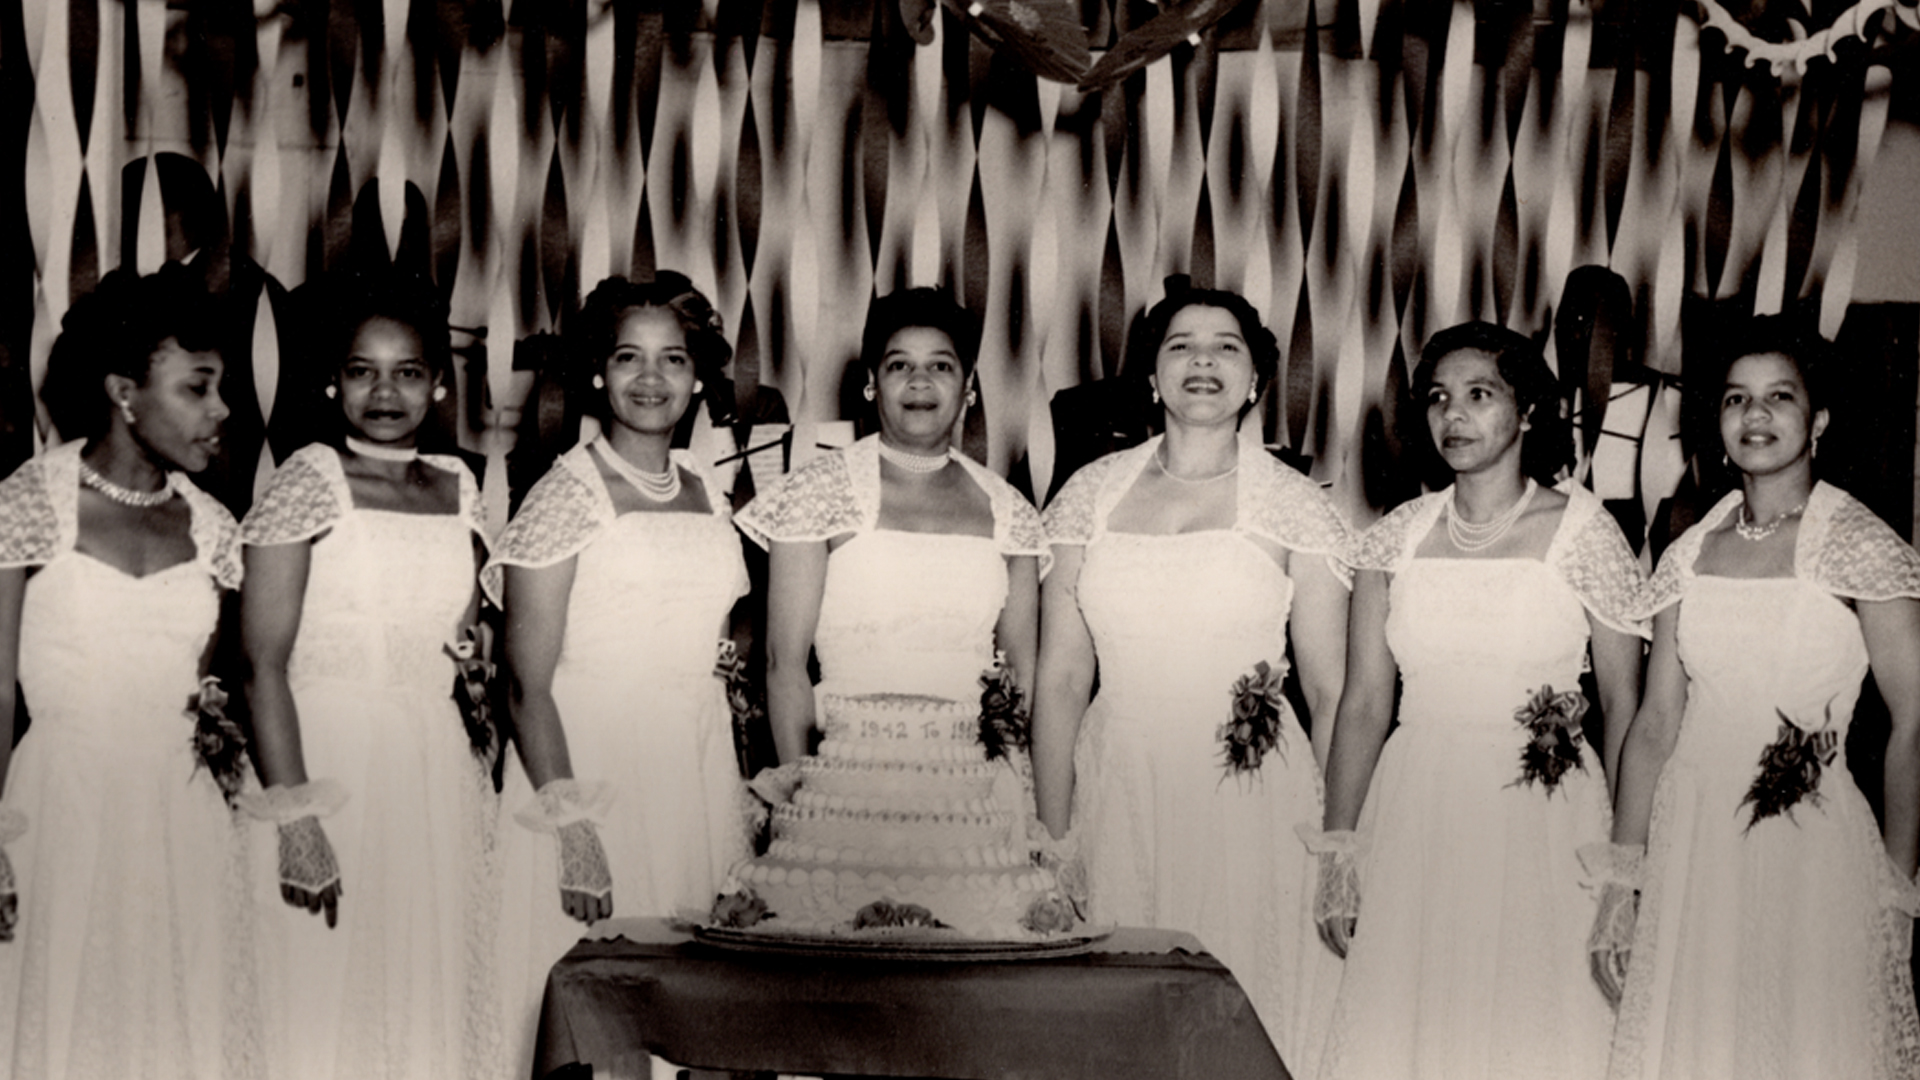 Lakeland community image of members of the Duchesses Social Club, 1942.